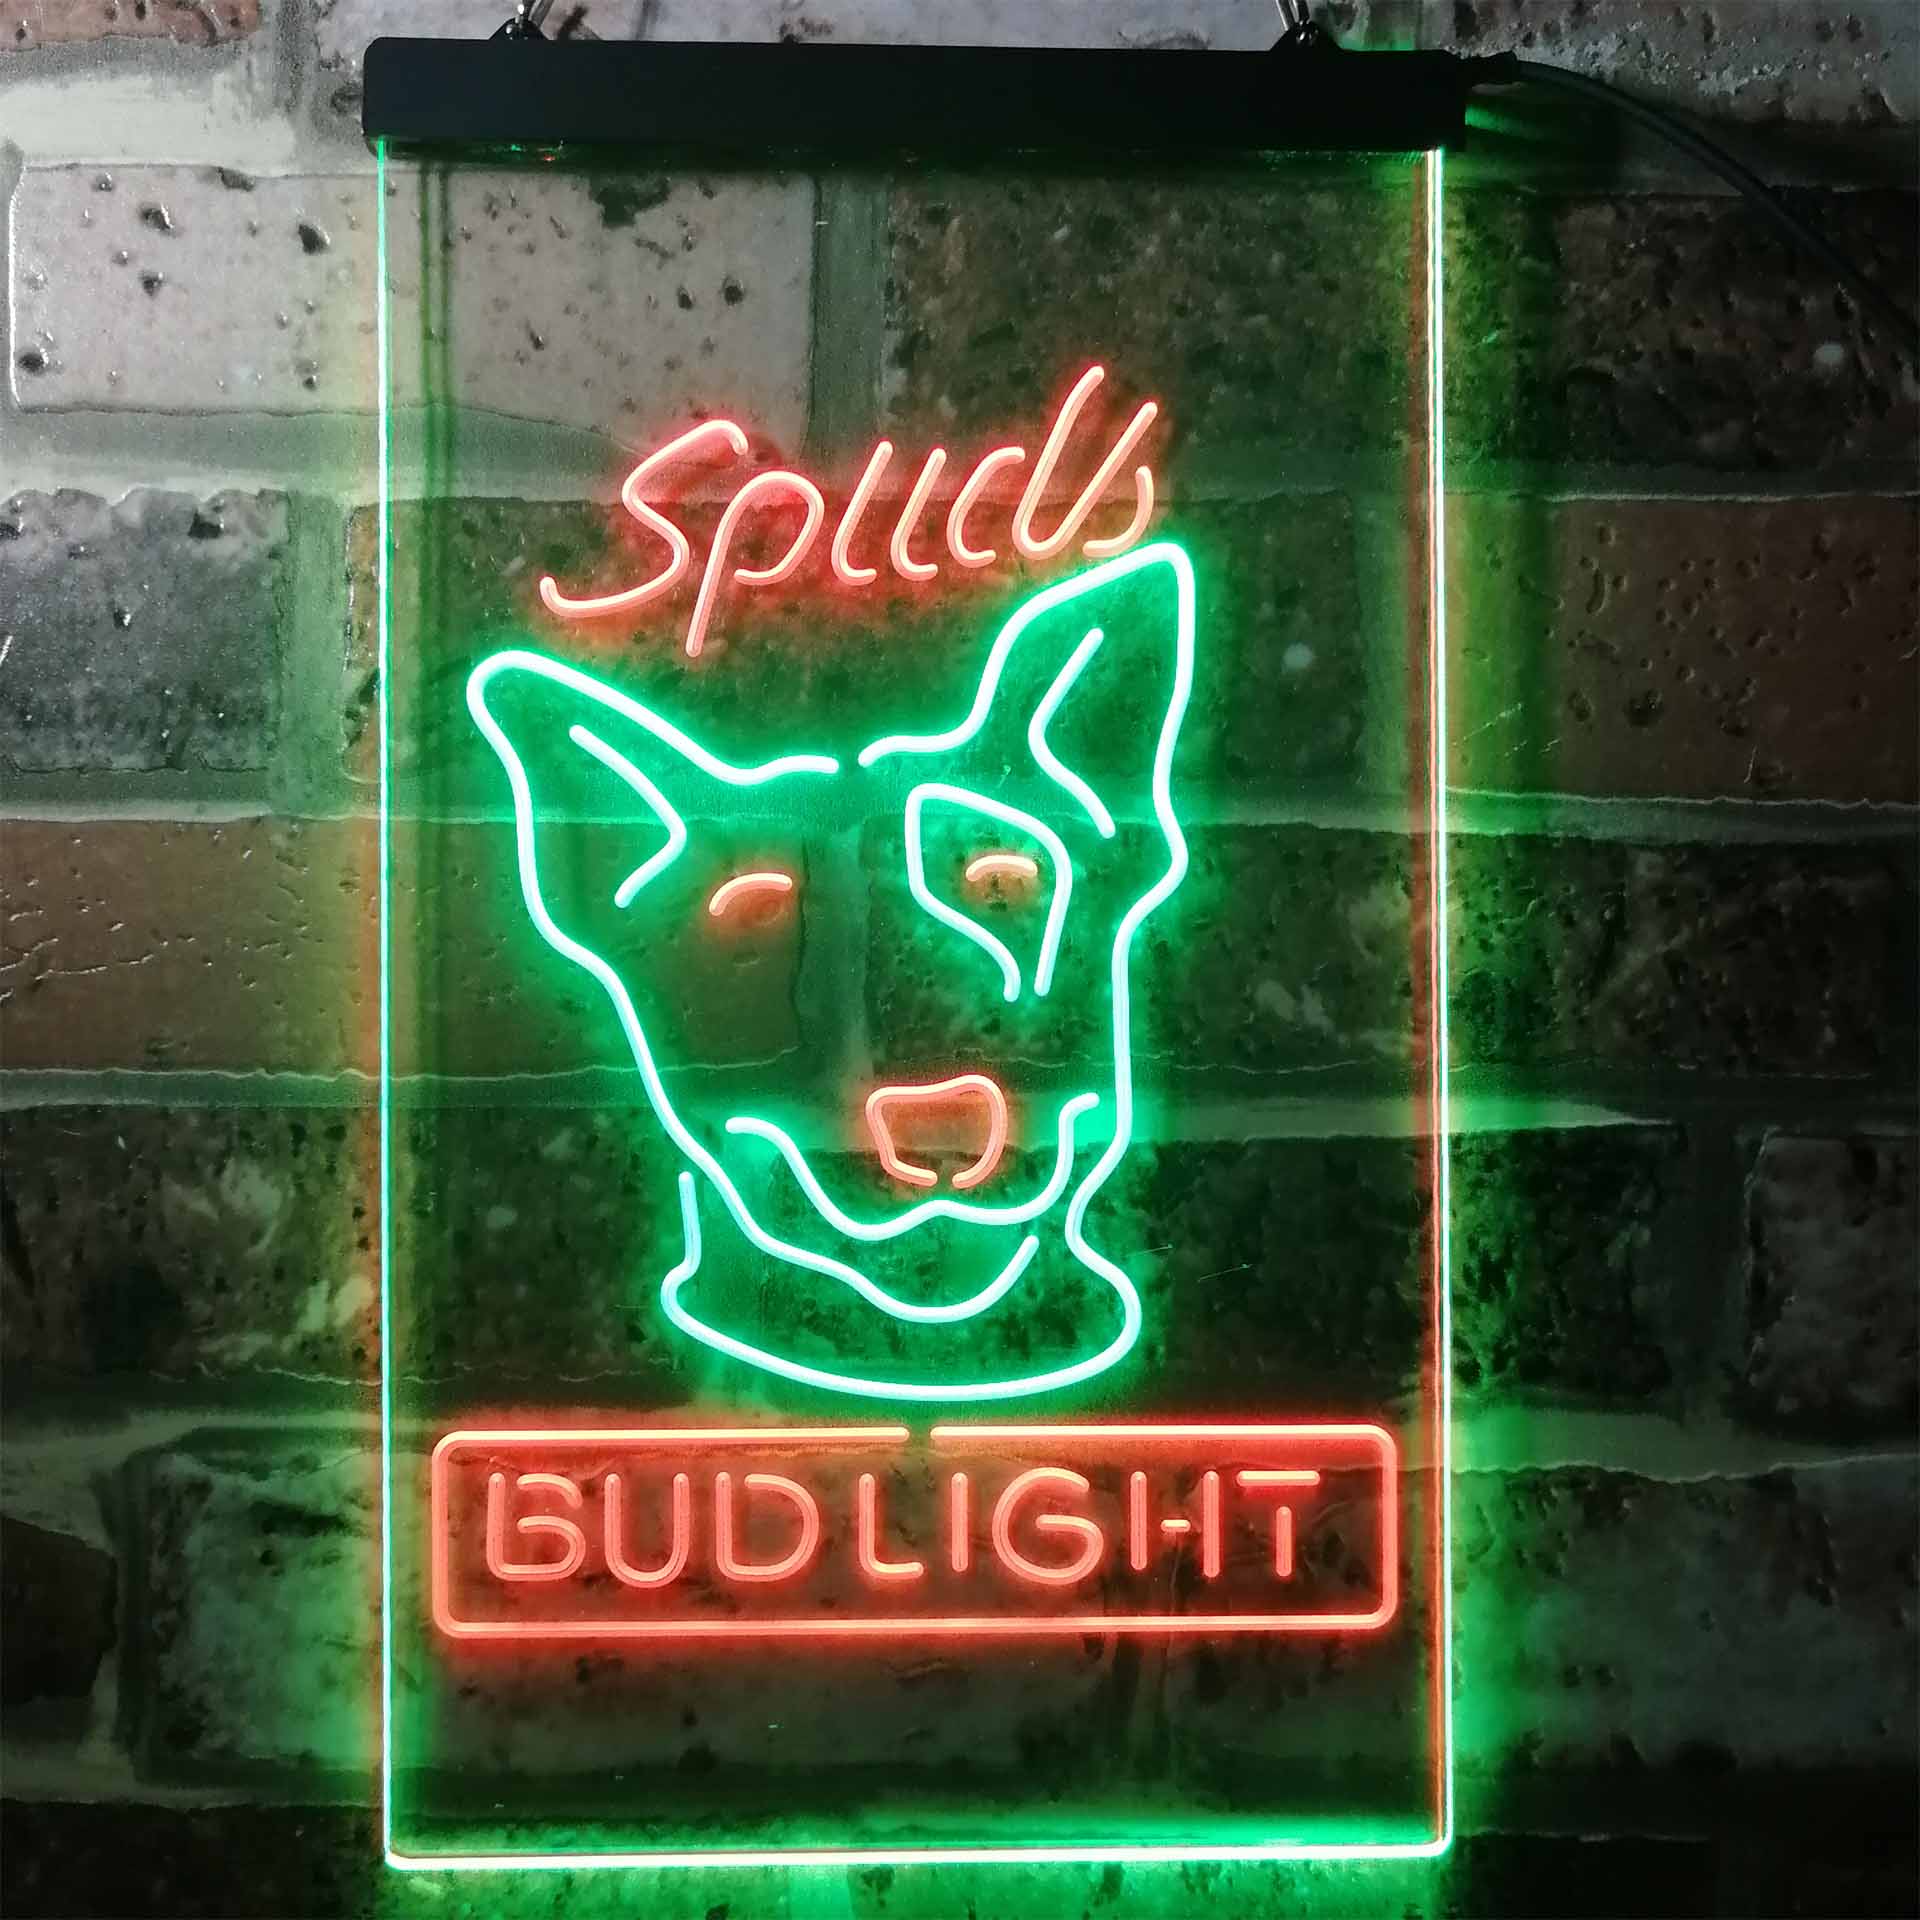 Spuds Mackenzie Bud Light Dual Color LED Neon Sign ProLedSign